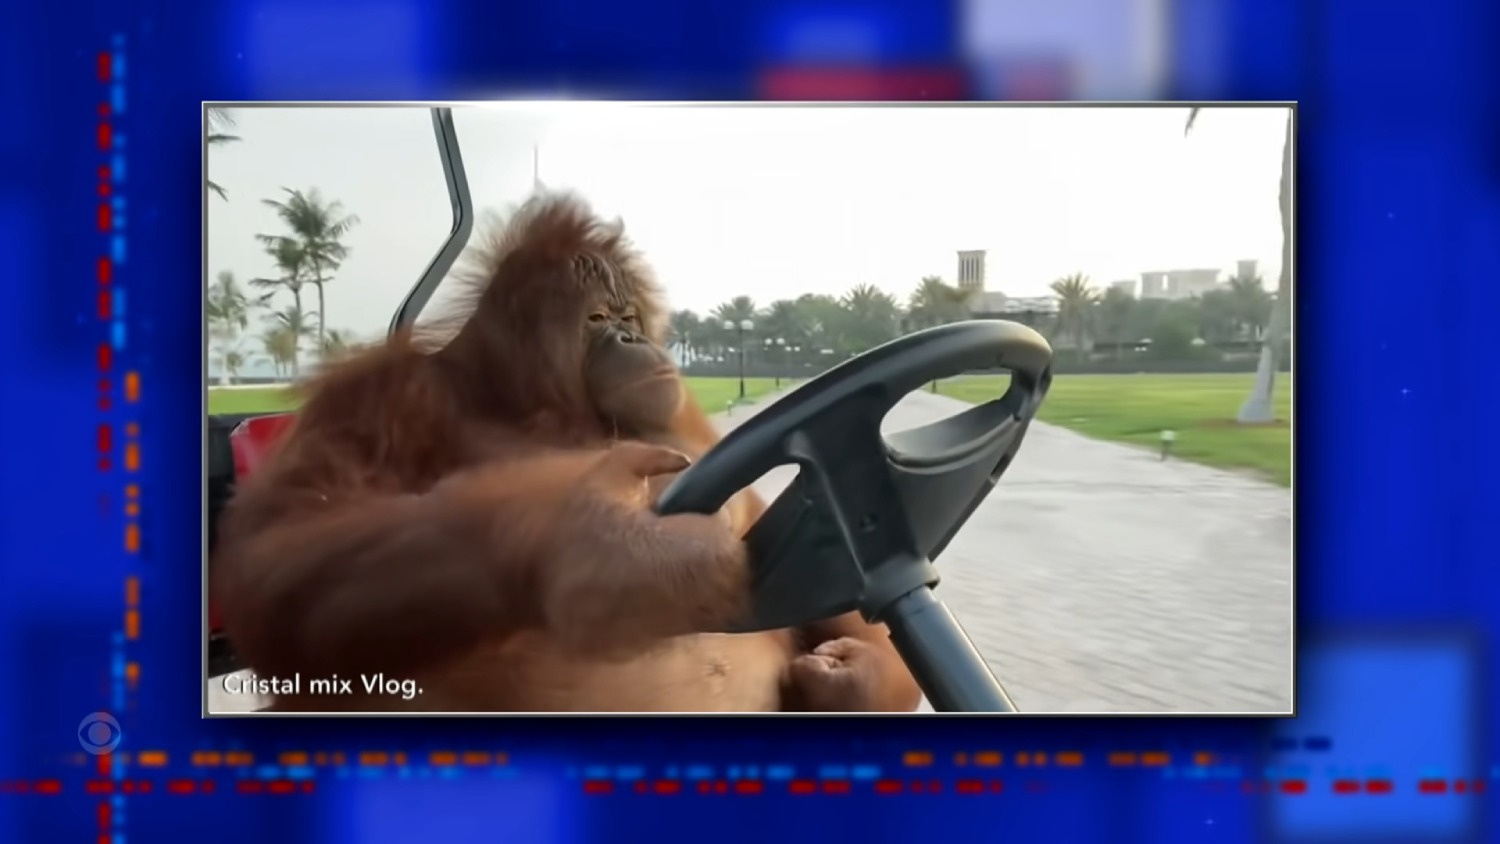 Rambo the orangutan from Dubai drives a golf cart and Porsche Boxster